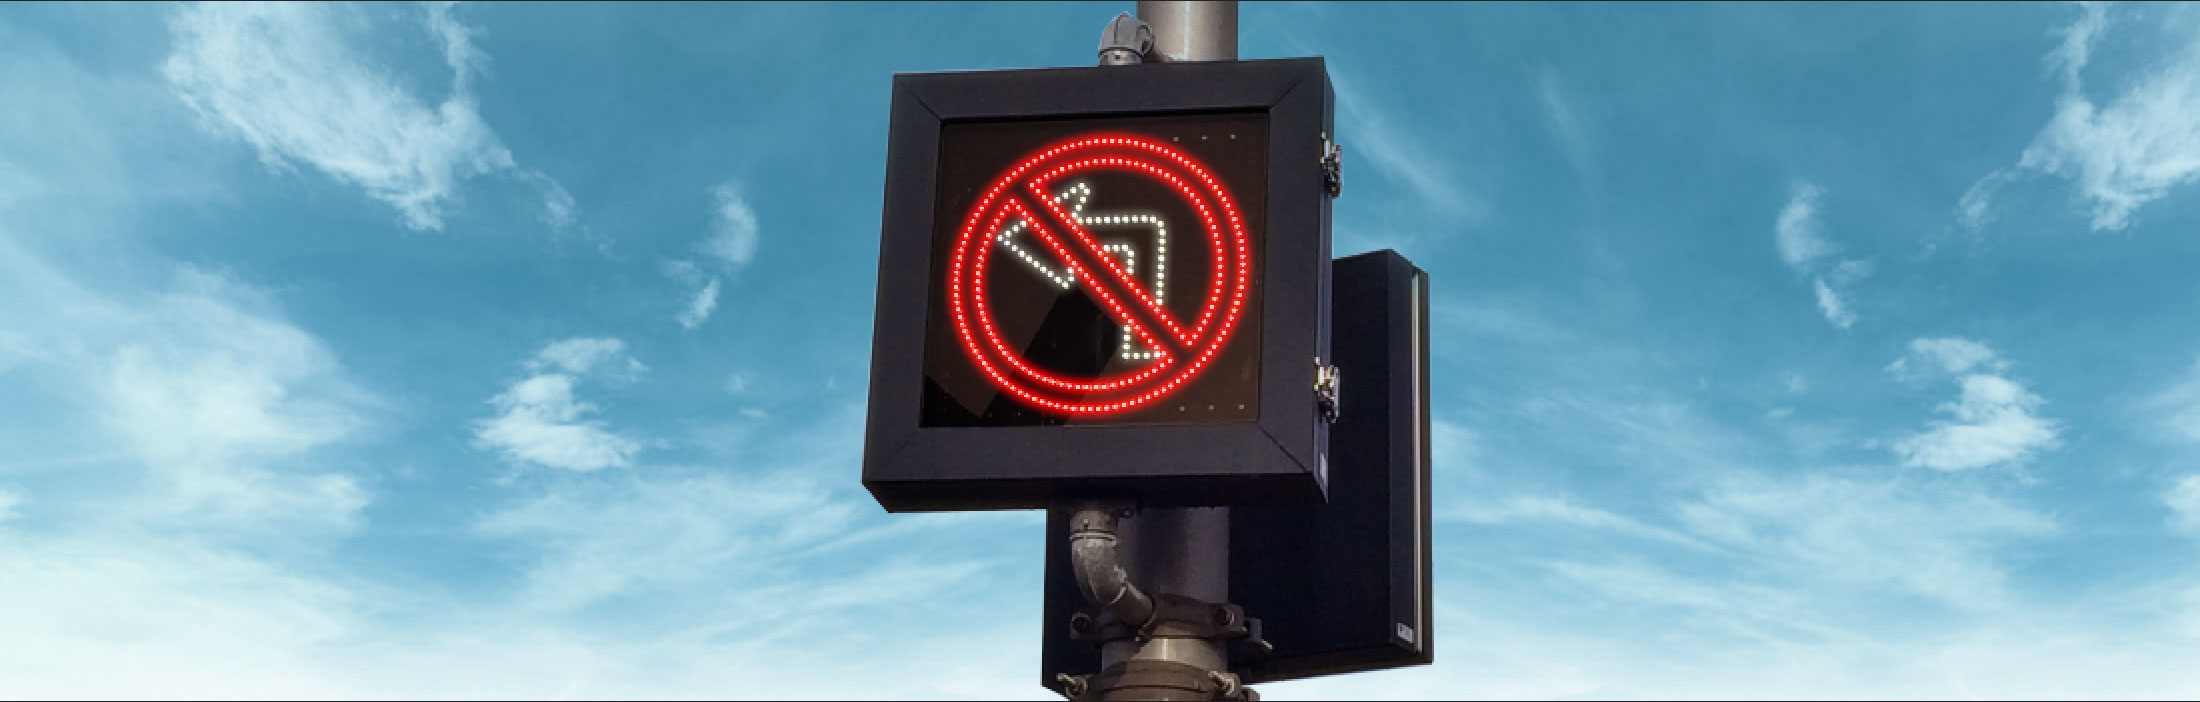 What’s the Latest on Illuminating MUTCD Traffic Signs Image